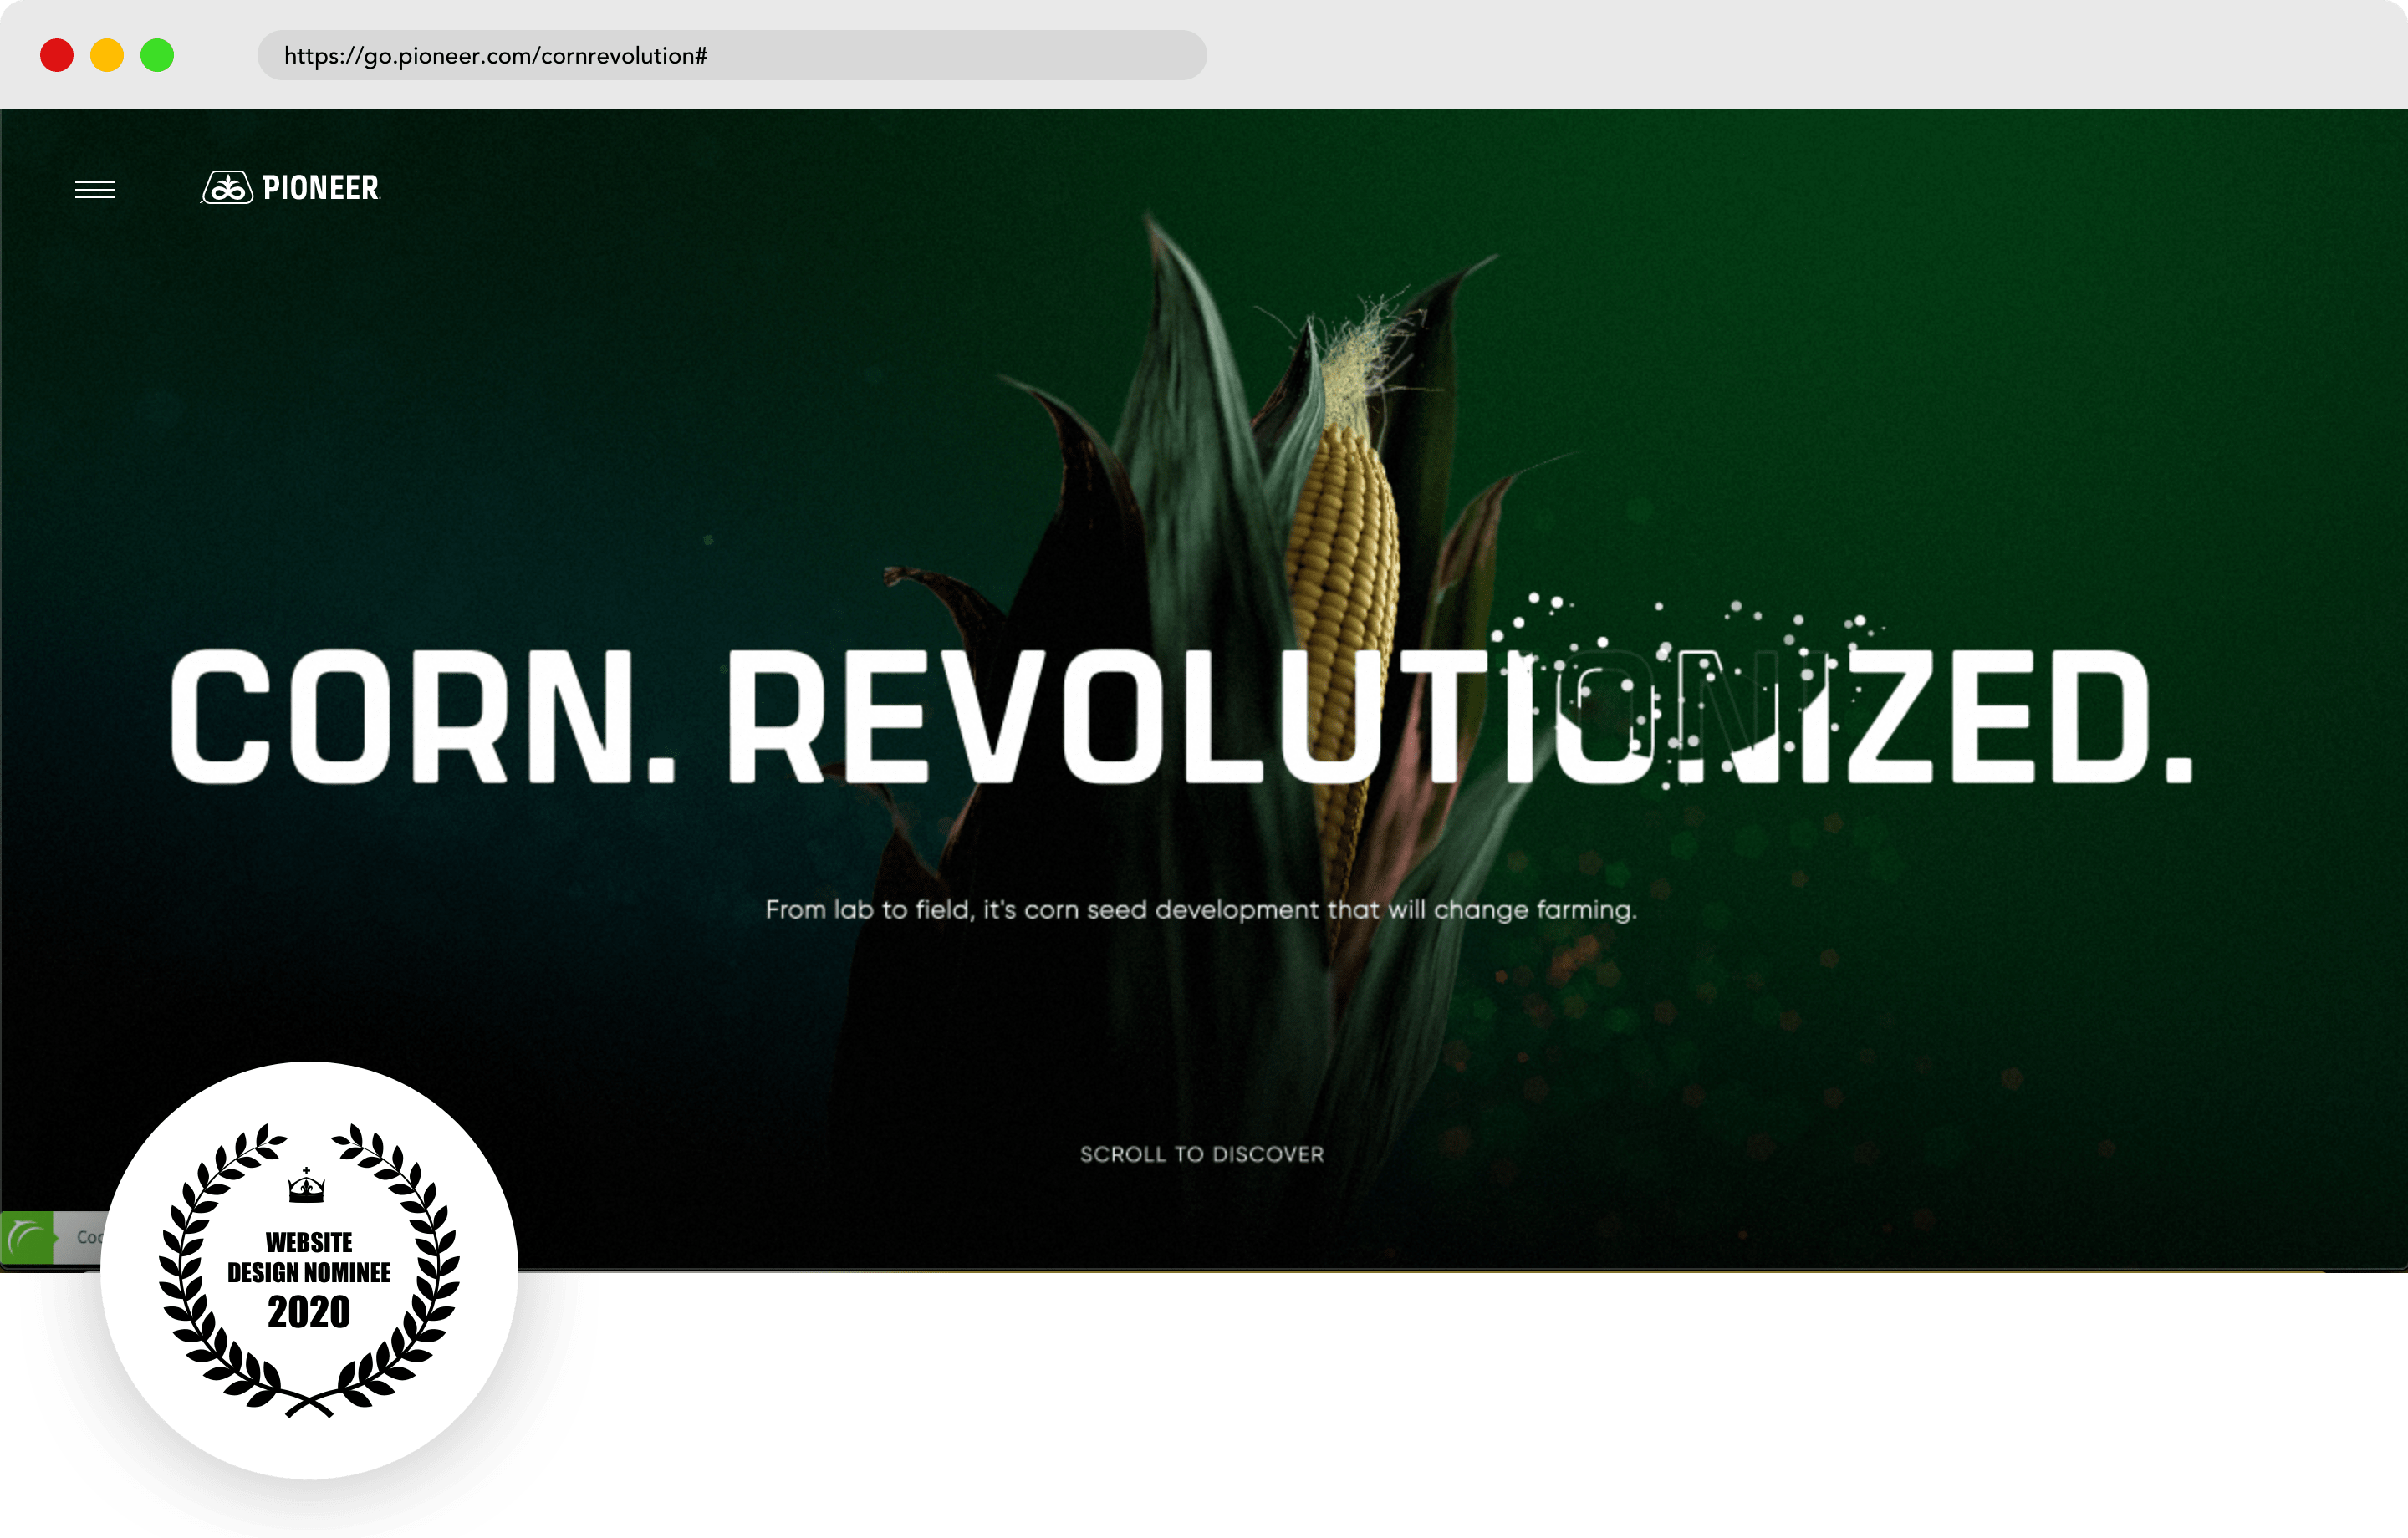 Best Website Pioneer – Corn. Revolutionized.